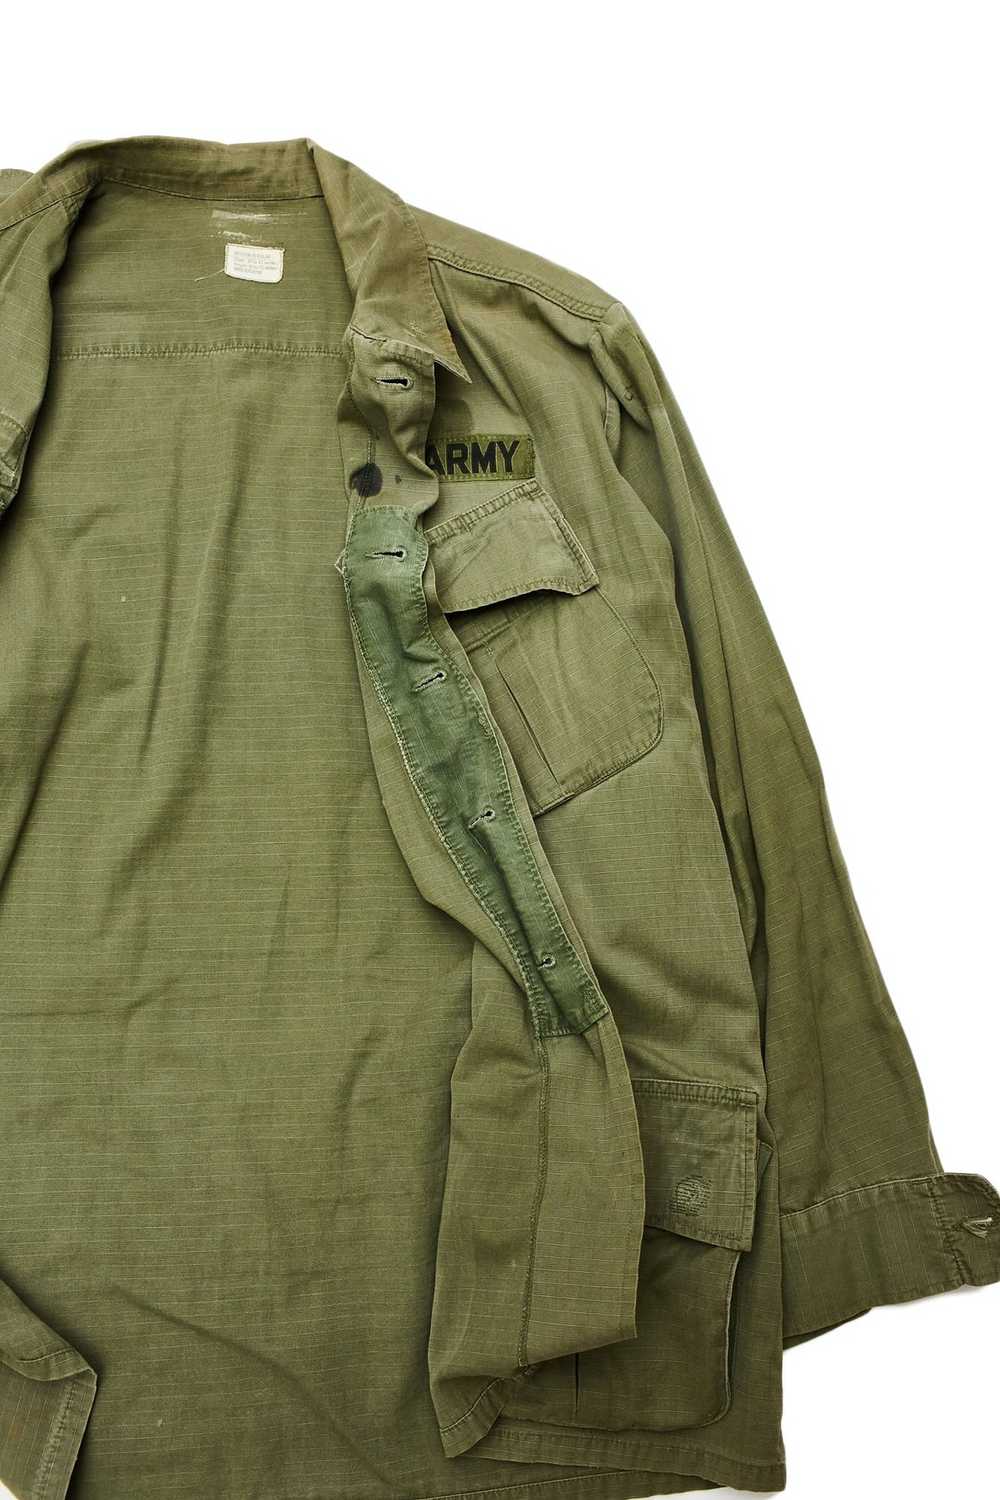 Military 70's Jungle Jacket - image 7